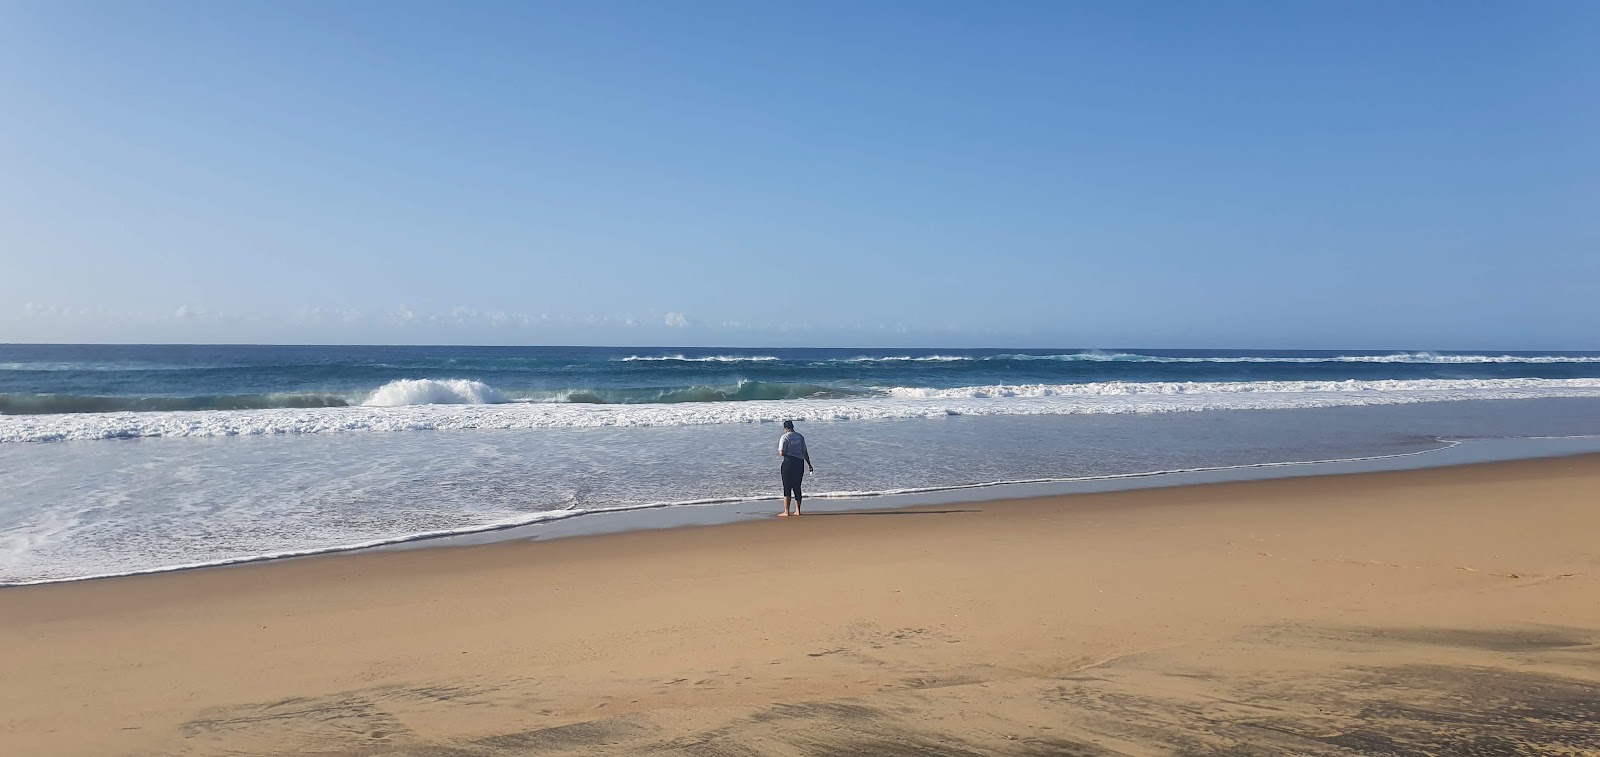 Fotografie cu Jabula beach cu nivelul de curățenie in medie